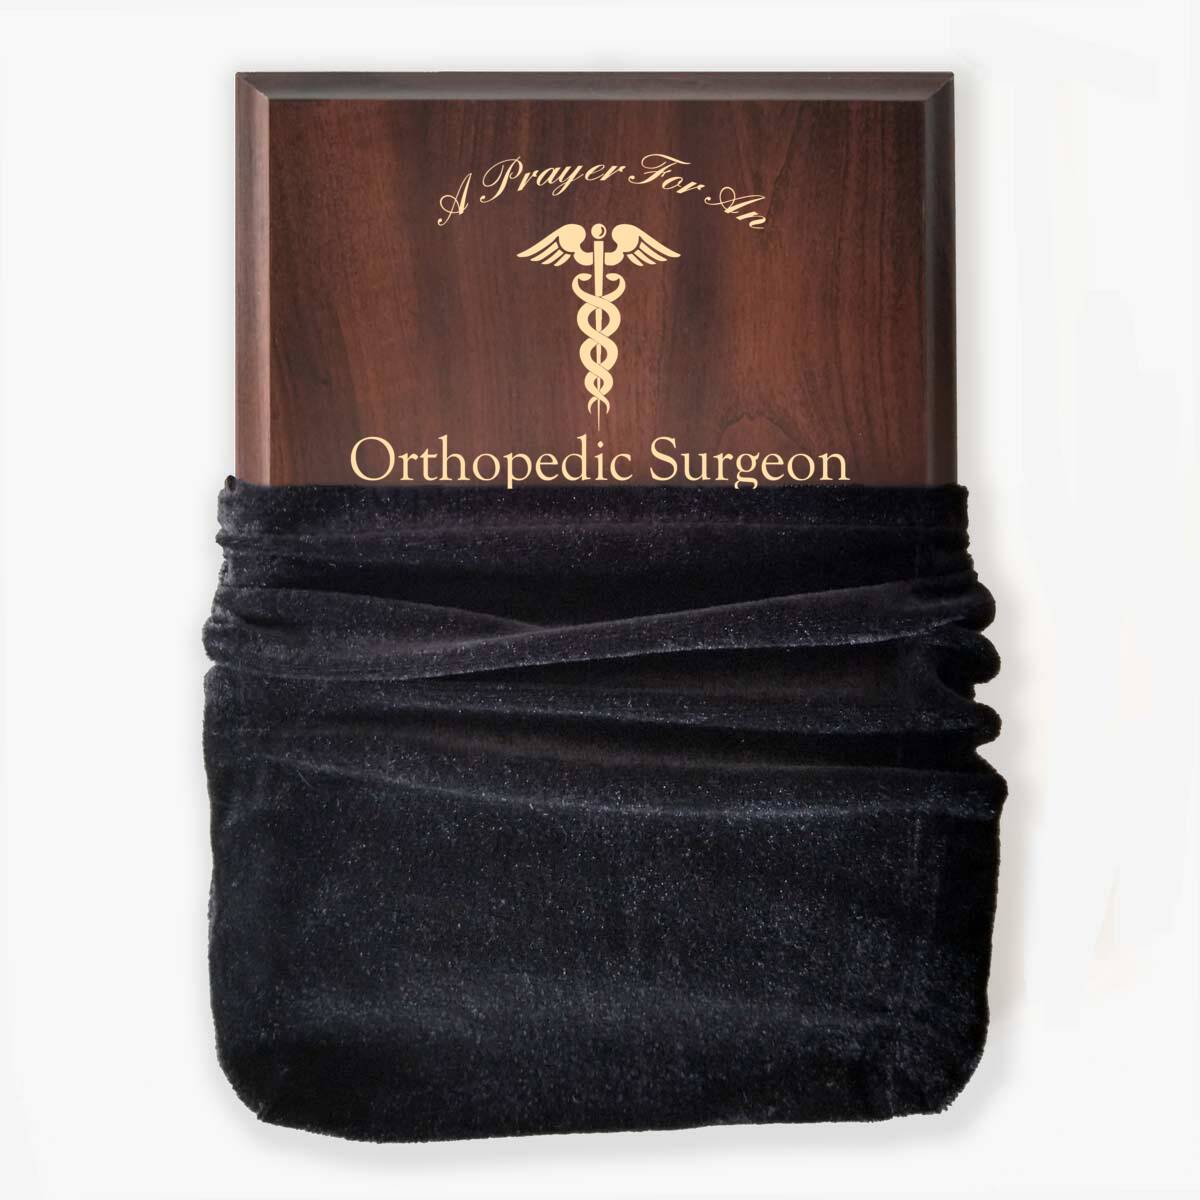 plaque orthopedic surgeon onplaque bagged 6810361d 3cd7 4025 97a2 9d514270bab0